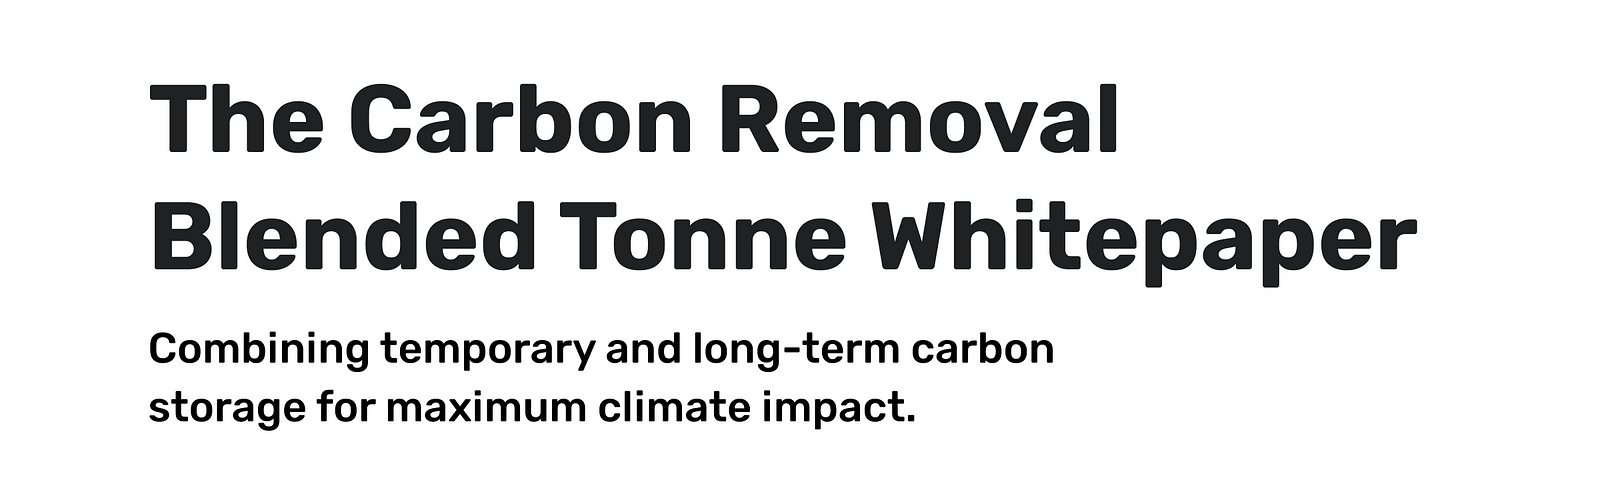 The Carbon Removal Blended Tonne Whitepaper